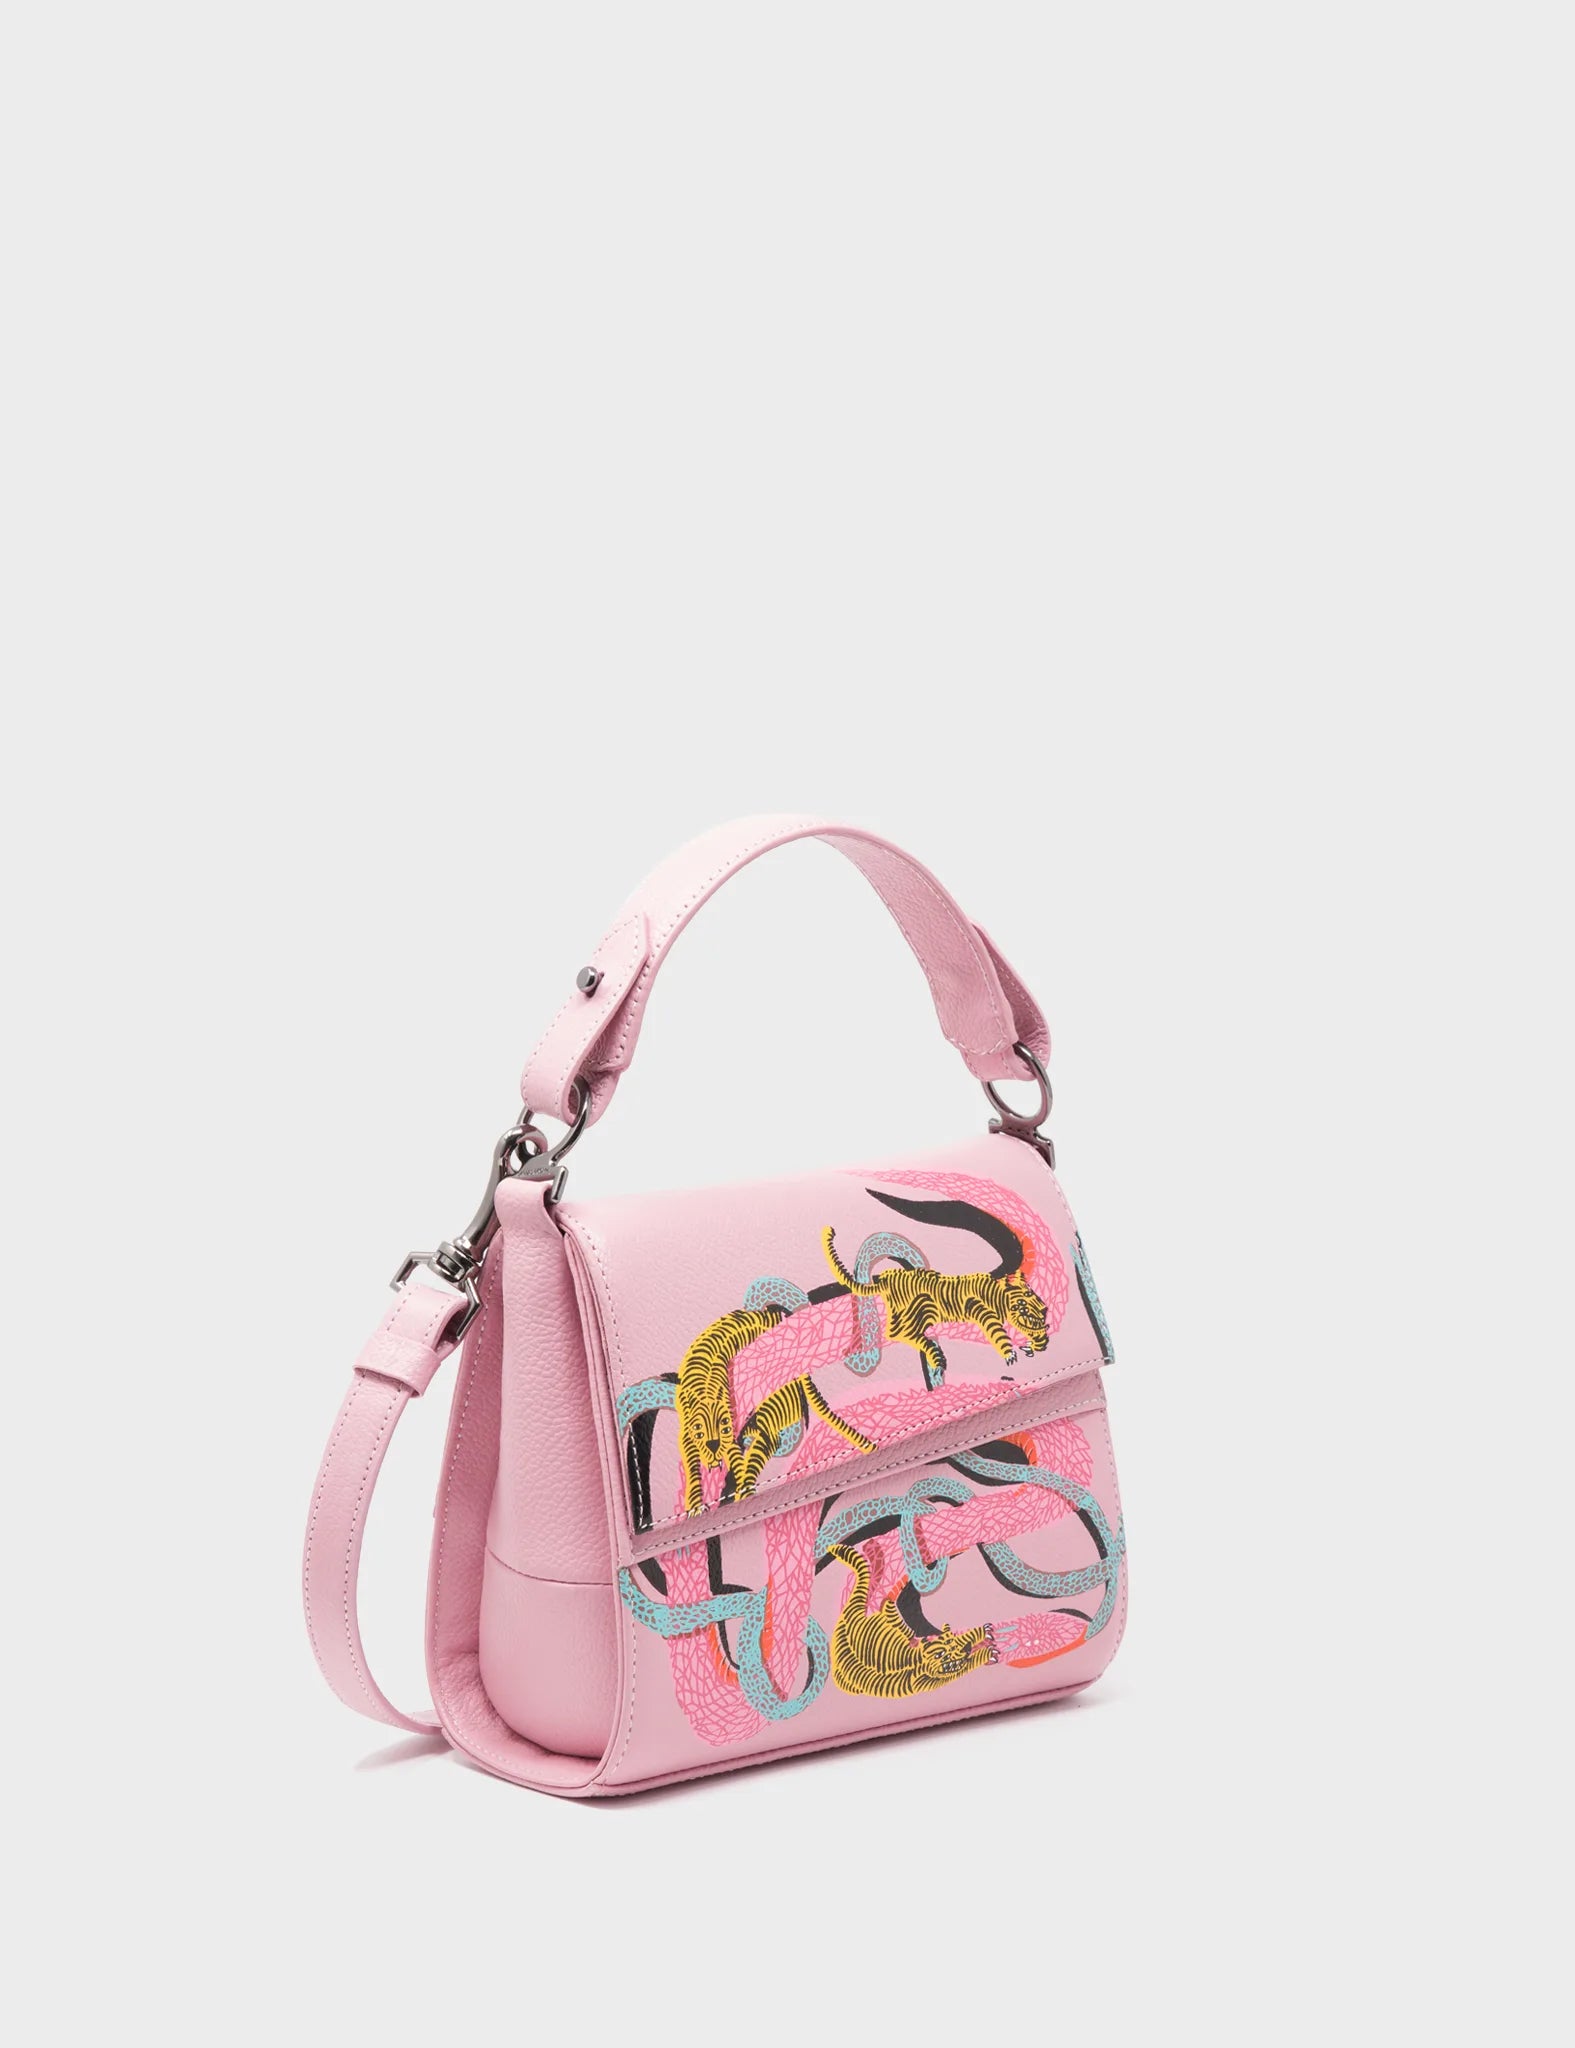 Micro Crossbody Handbag Blush Pink Leather - Tiger and Snake Print